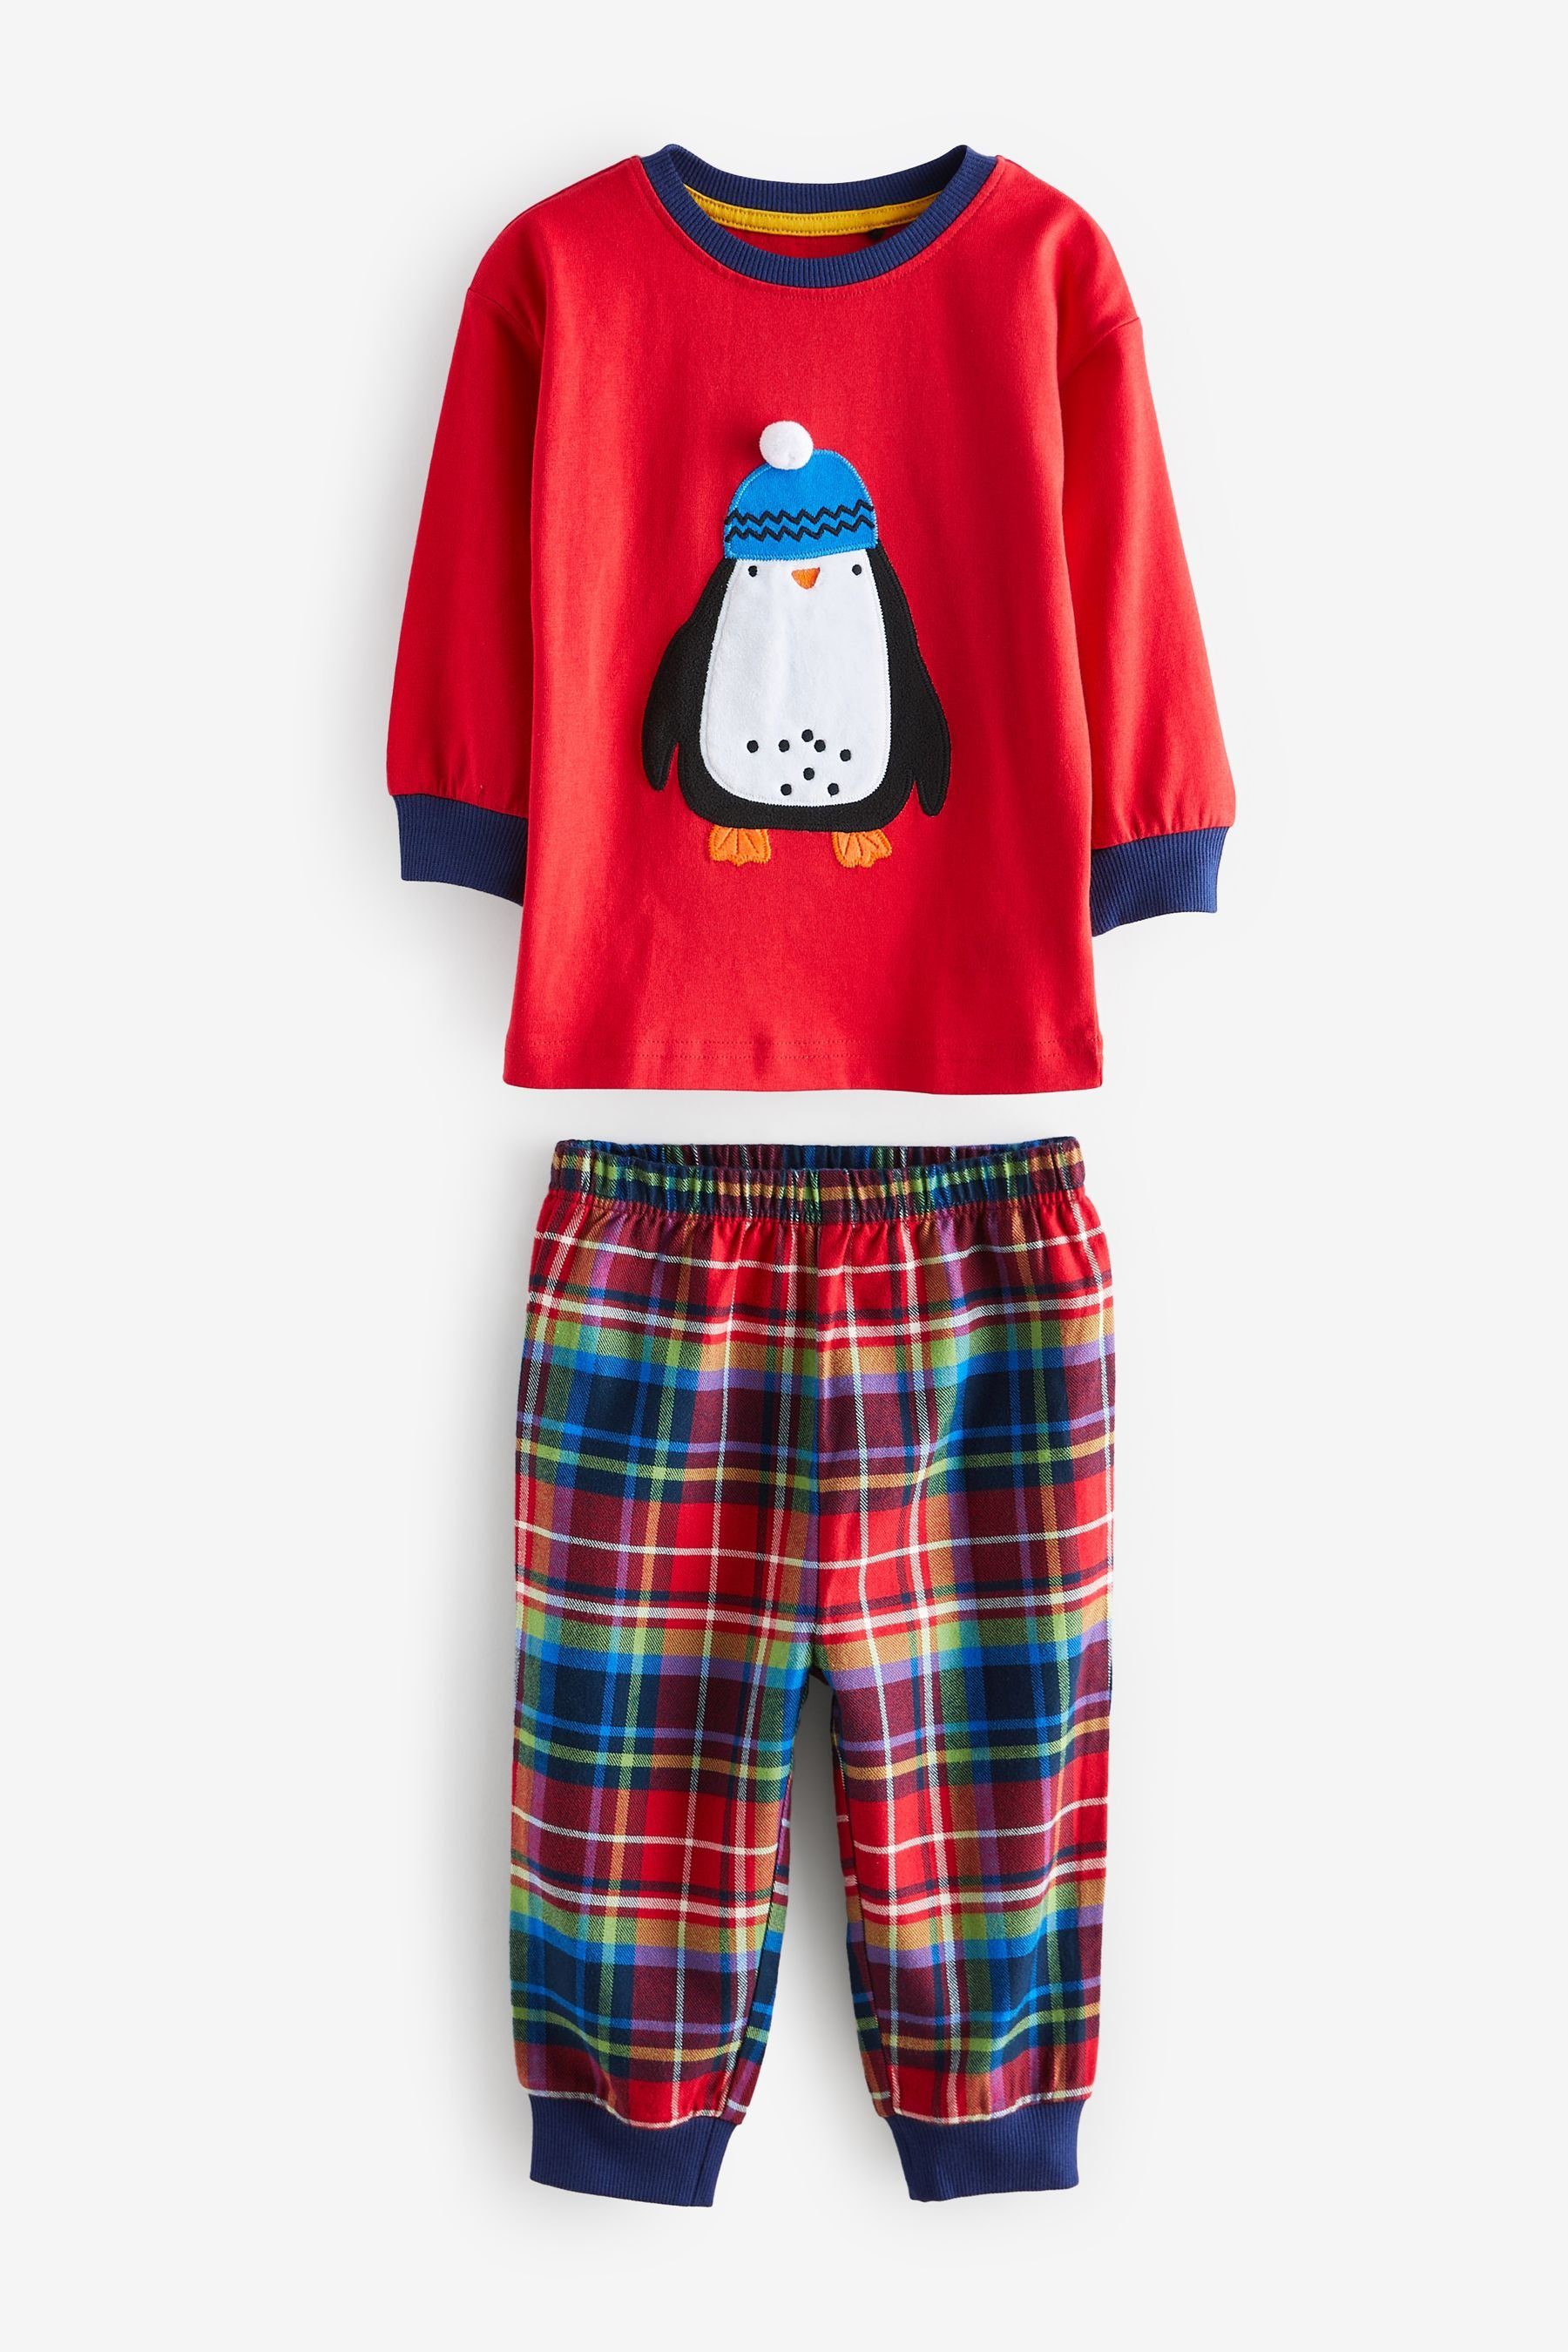 And Next Pyjama, Penguin Pyjama Navy tlg) Polar (4 Karierter Blue/Red 2er-Pack Bear